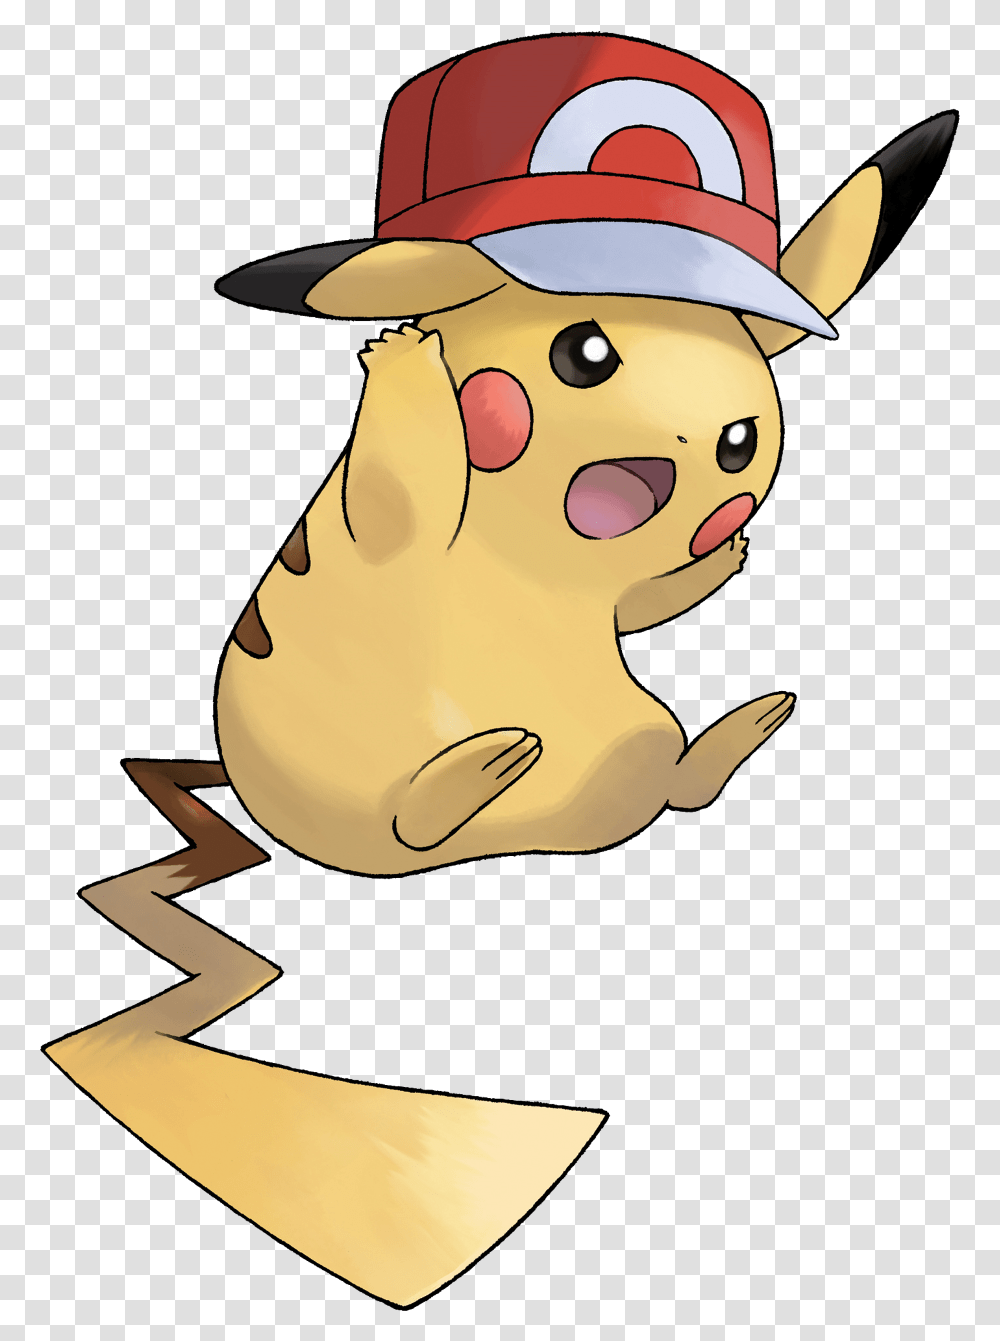 Kalos Cap Pikachu Wants Your Love Pokcharms Pokemon Pikachu, Mammal, Animal, Clothing, Hat Transparent Png